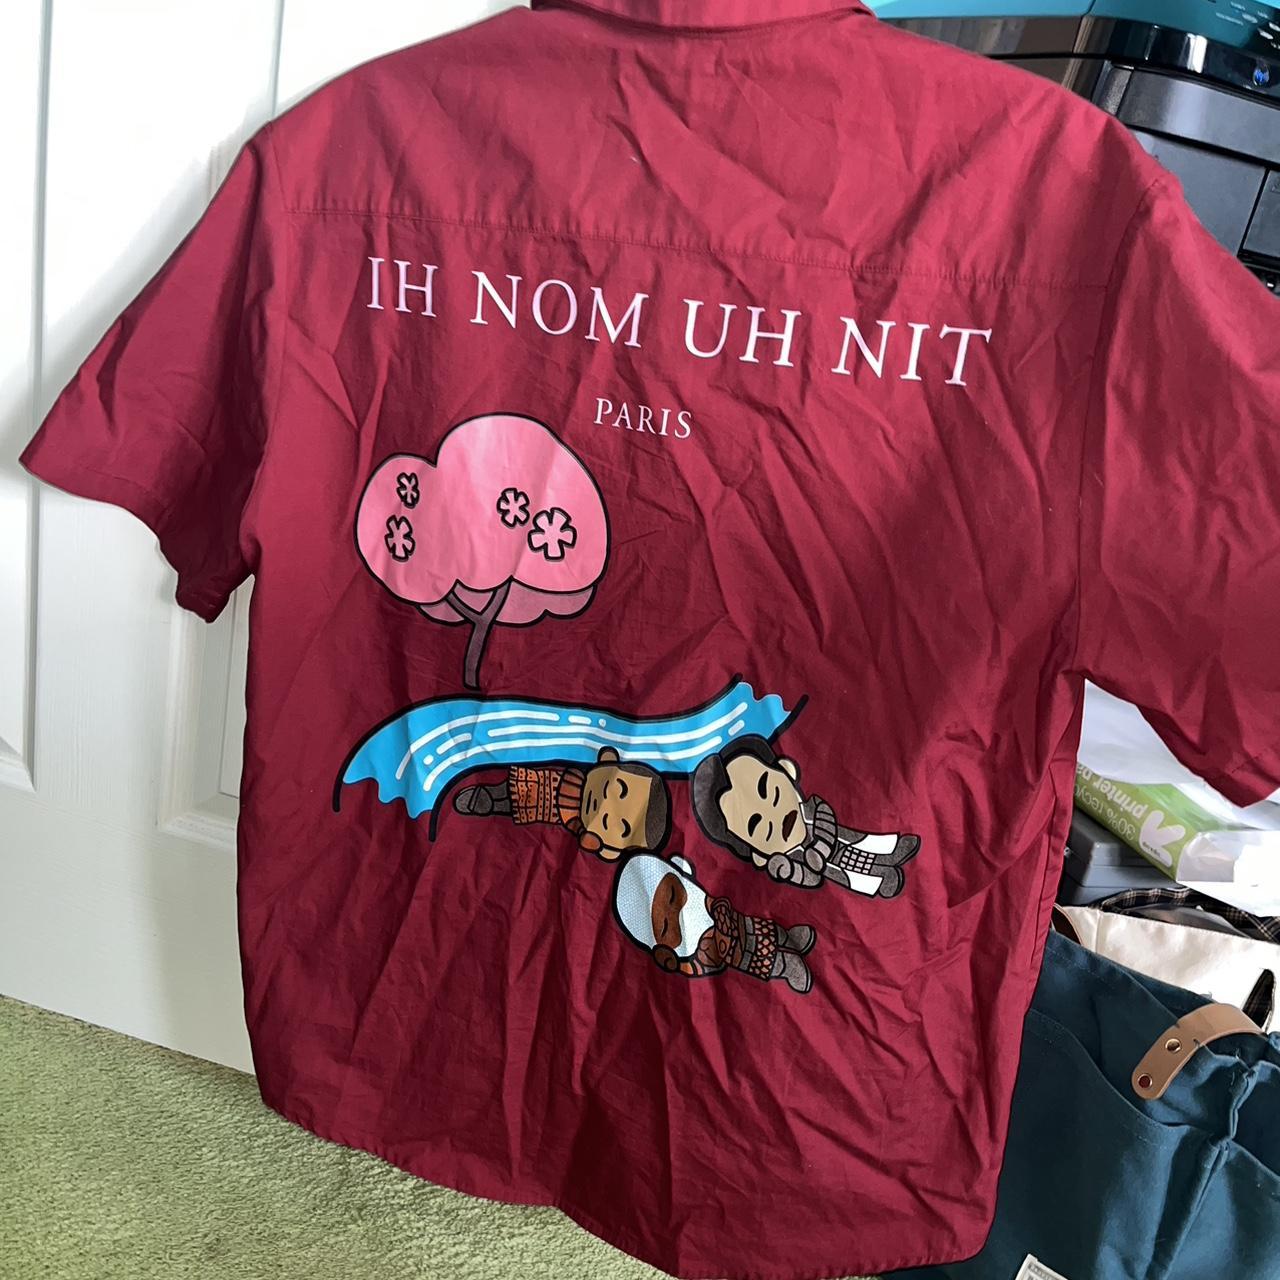 IH NOM UH NIT - Jungle Print Shirt